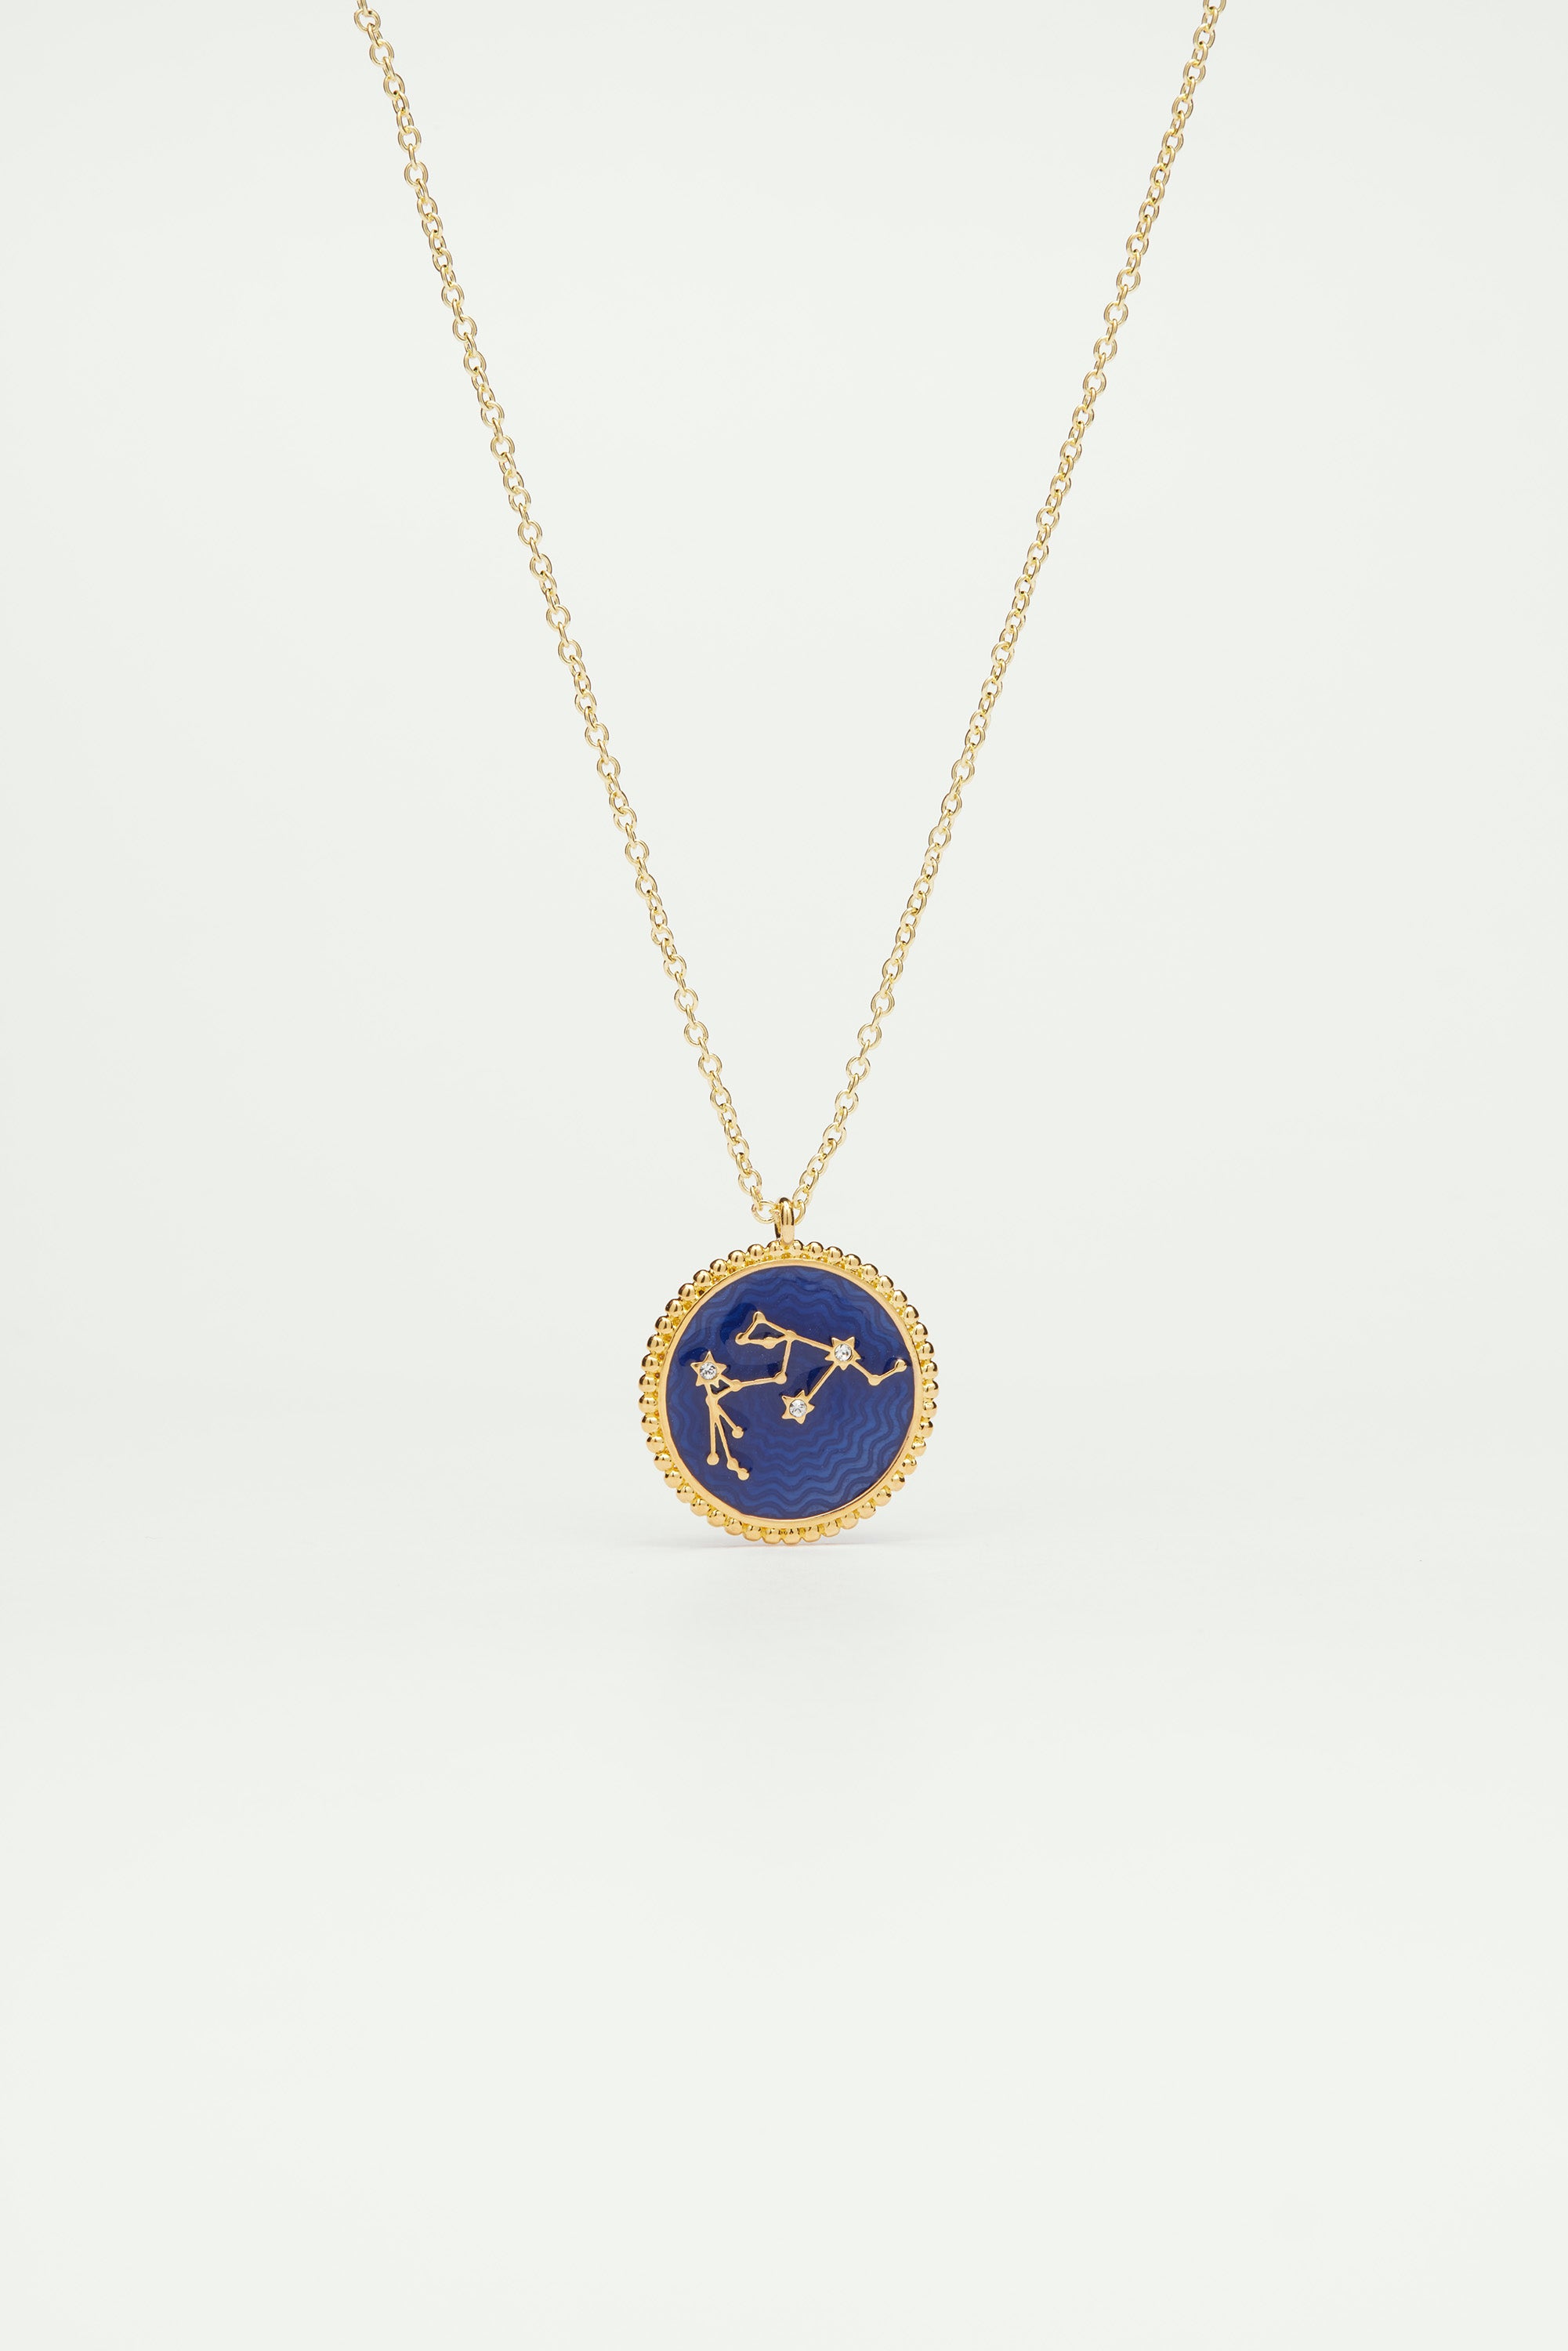 Collier pendentif signe astrologique verseau